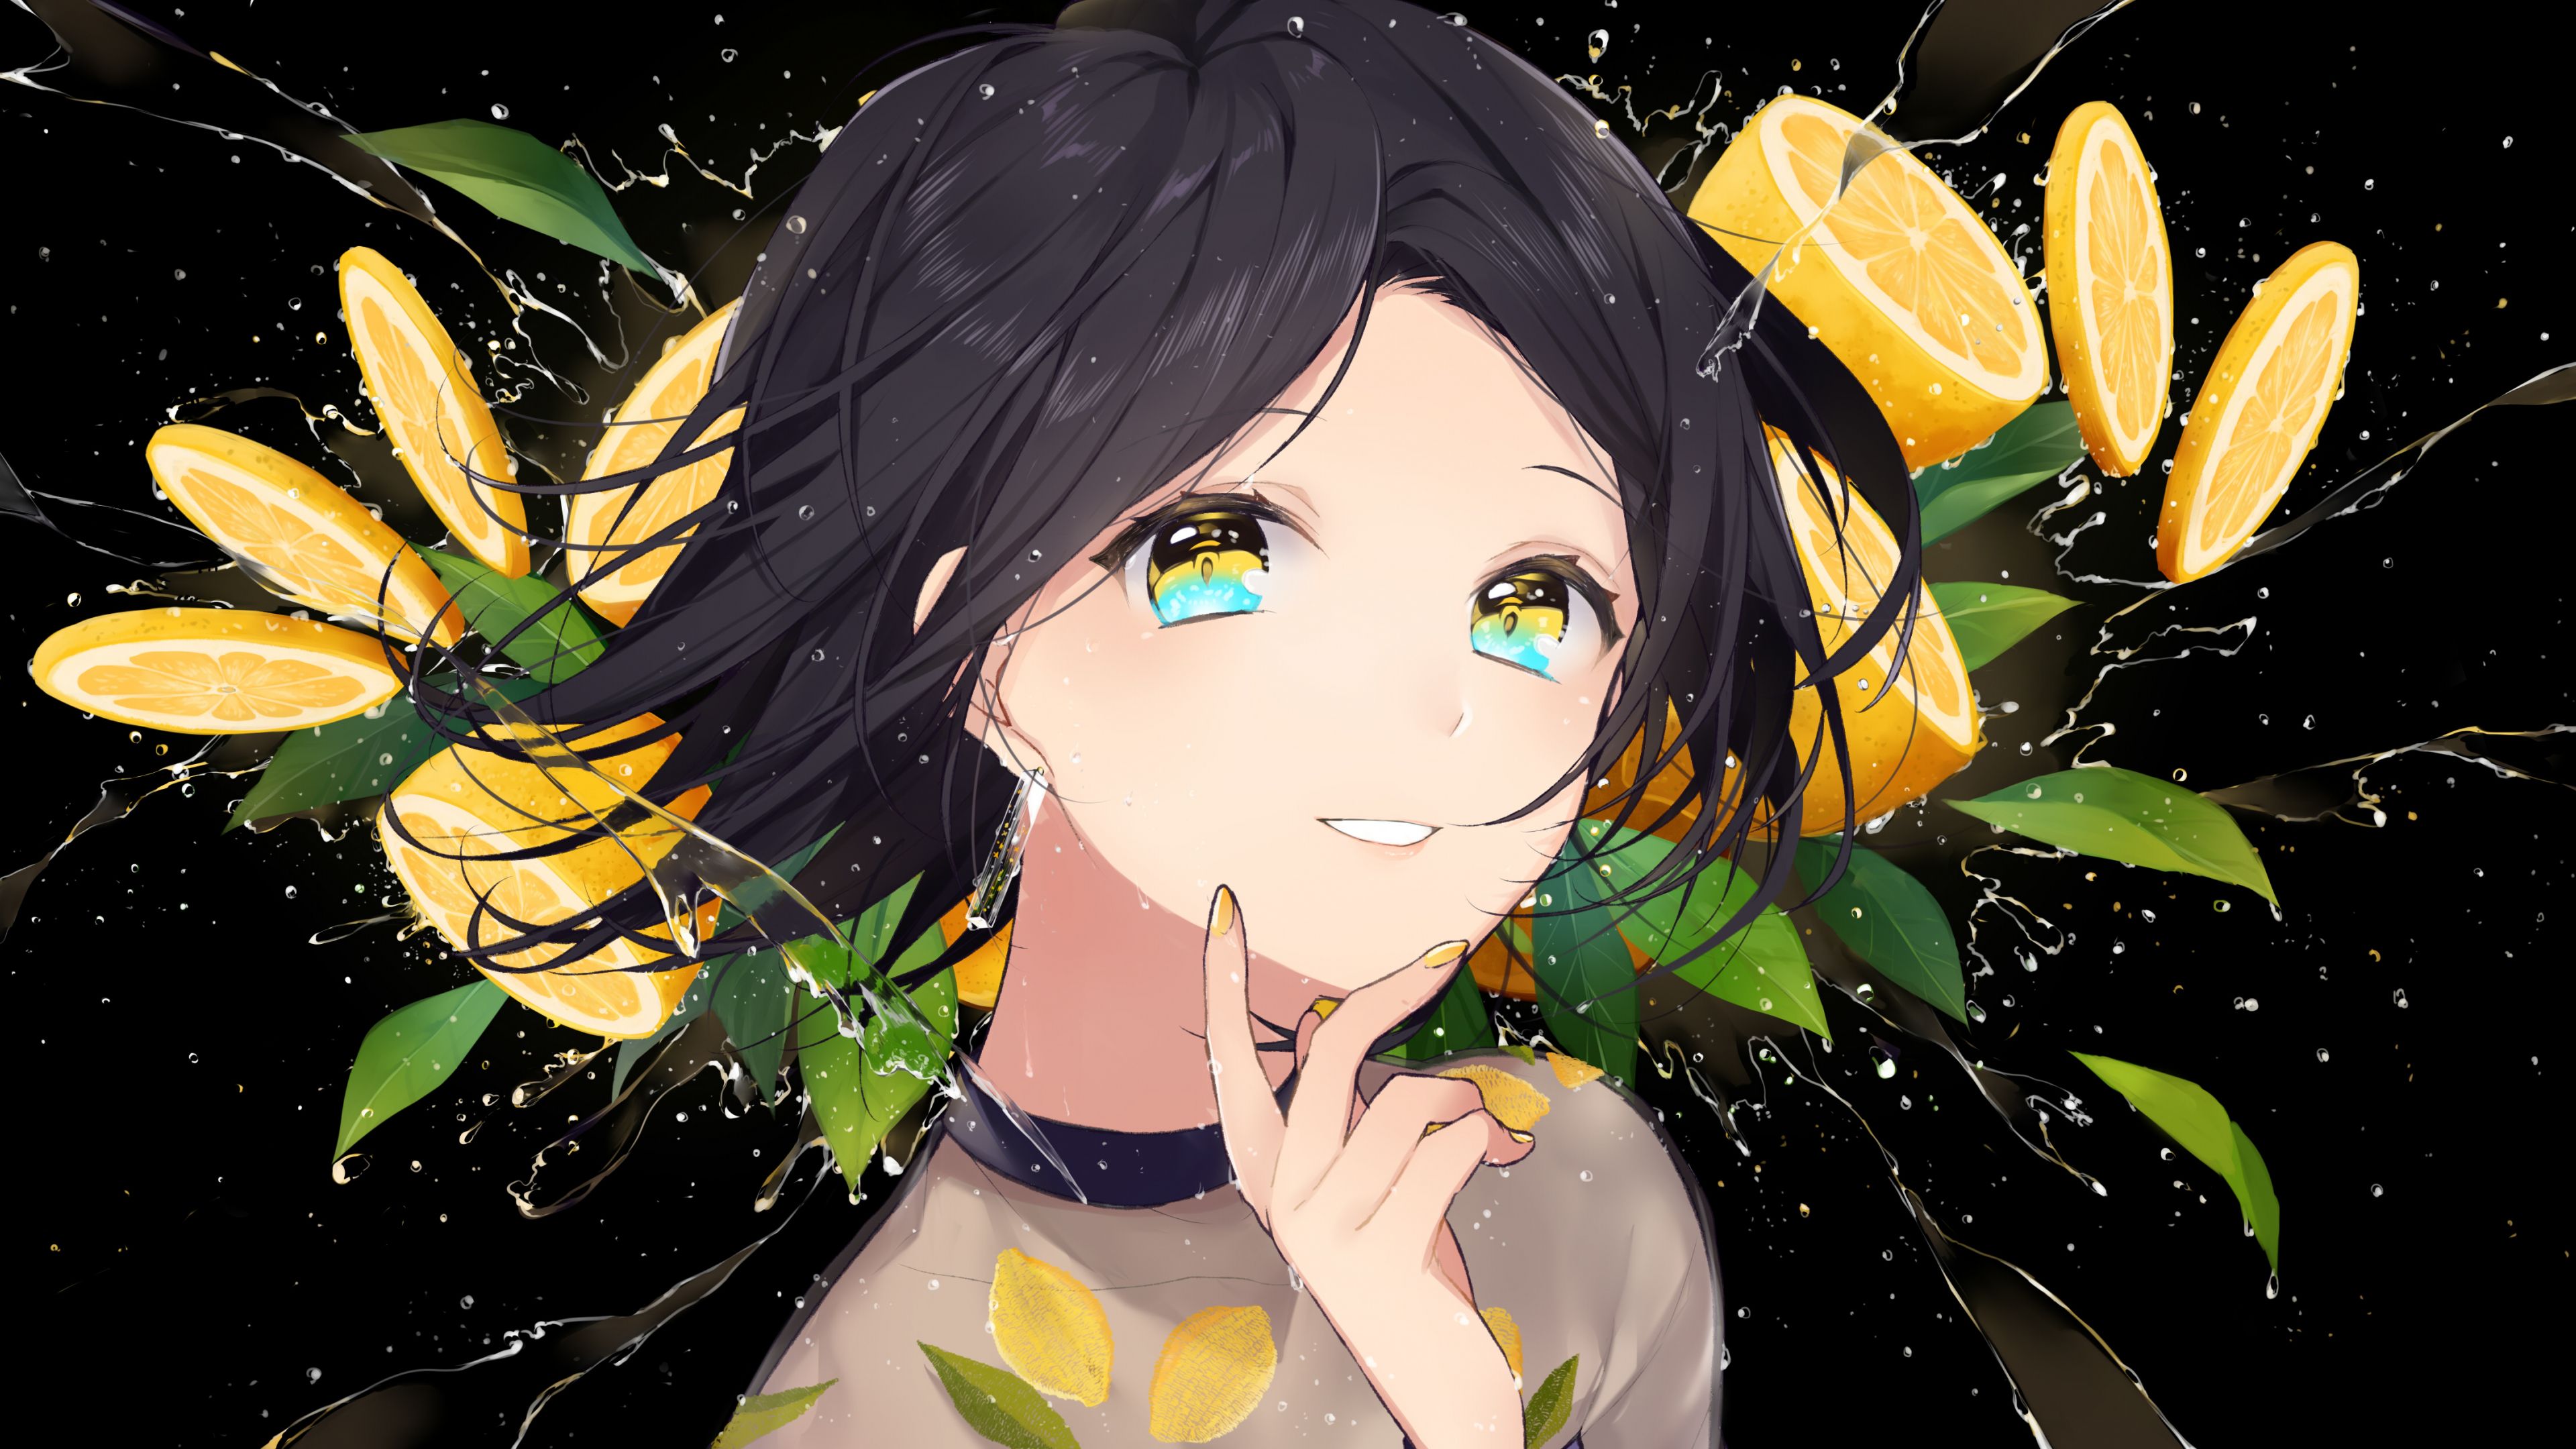 Download 3840x2160 wallpaper cute, anime girl, happy, 4k, uhd 16: widescreen, 3840x2160 HD image, background, 10476